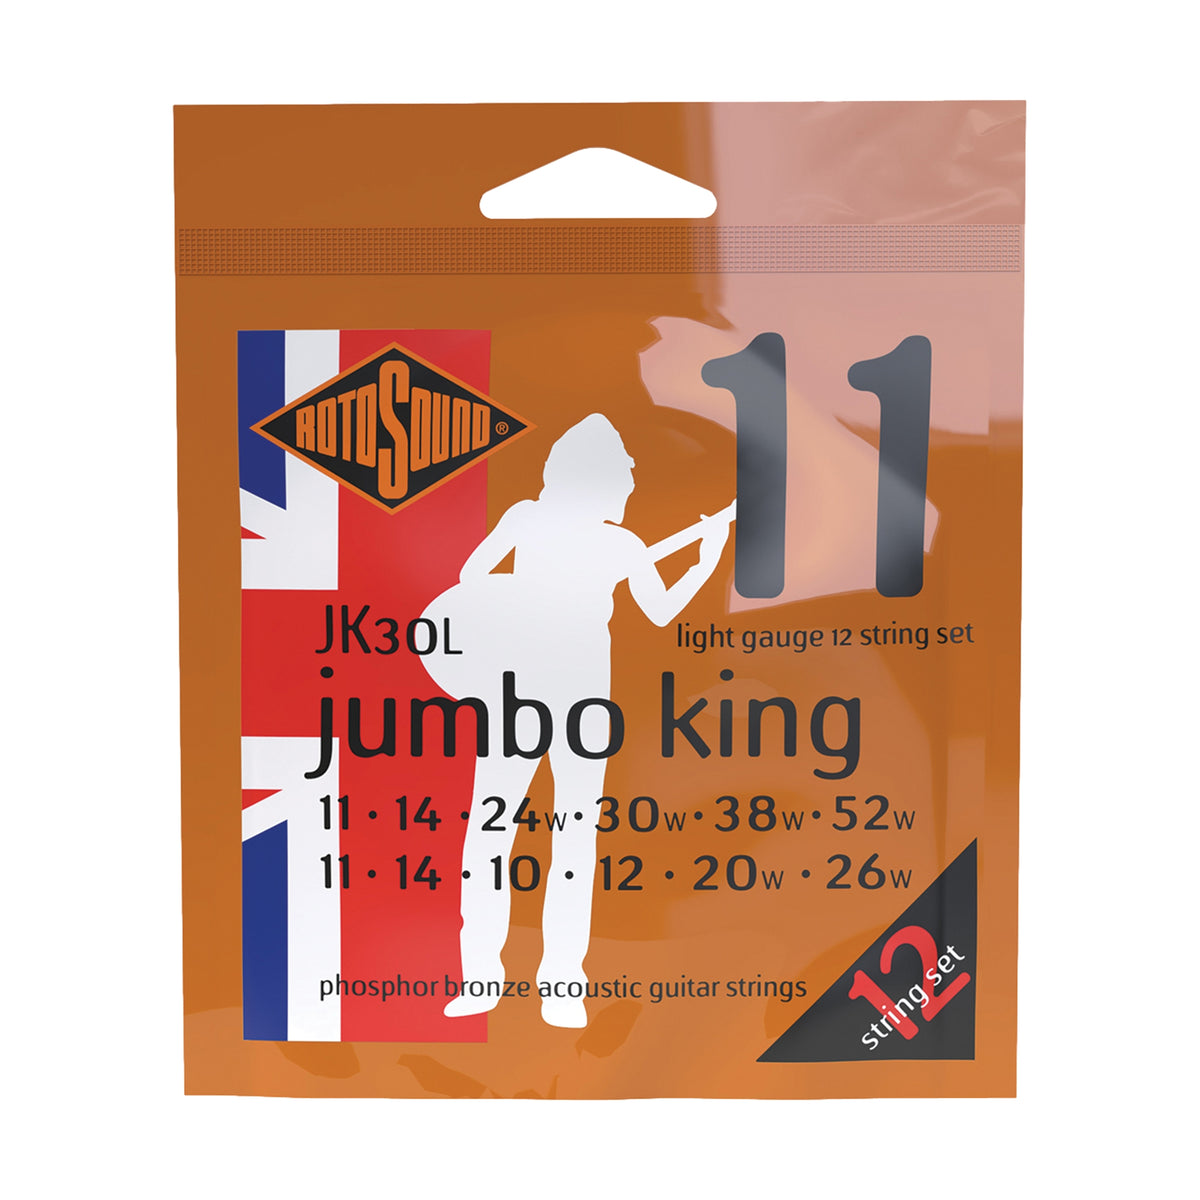 Rotosound JK30L Jumbo King 12 String Set Phosphor Bronze